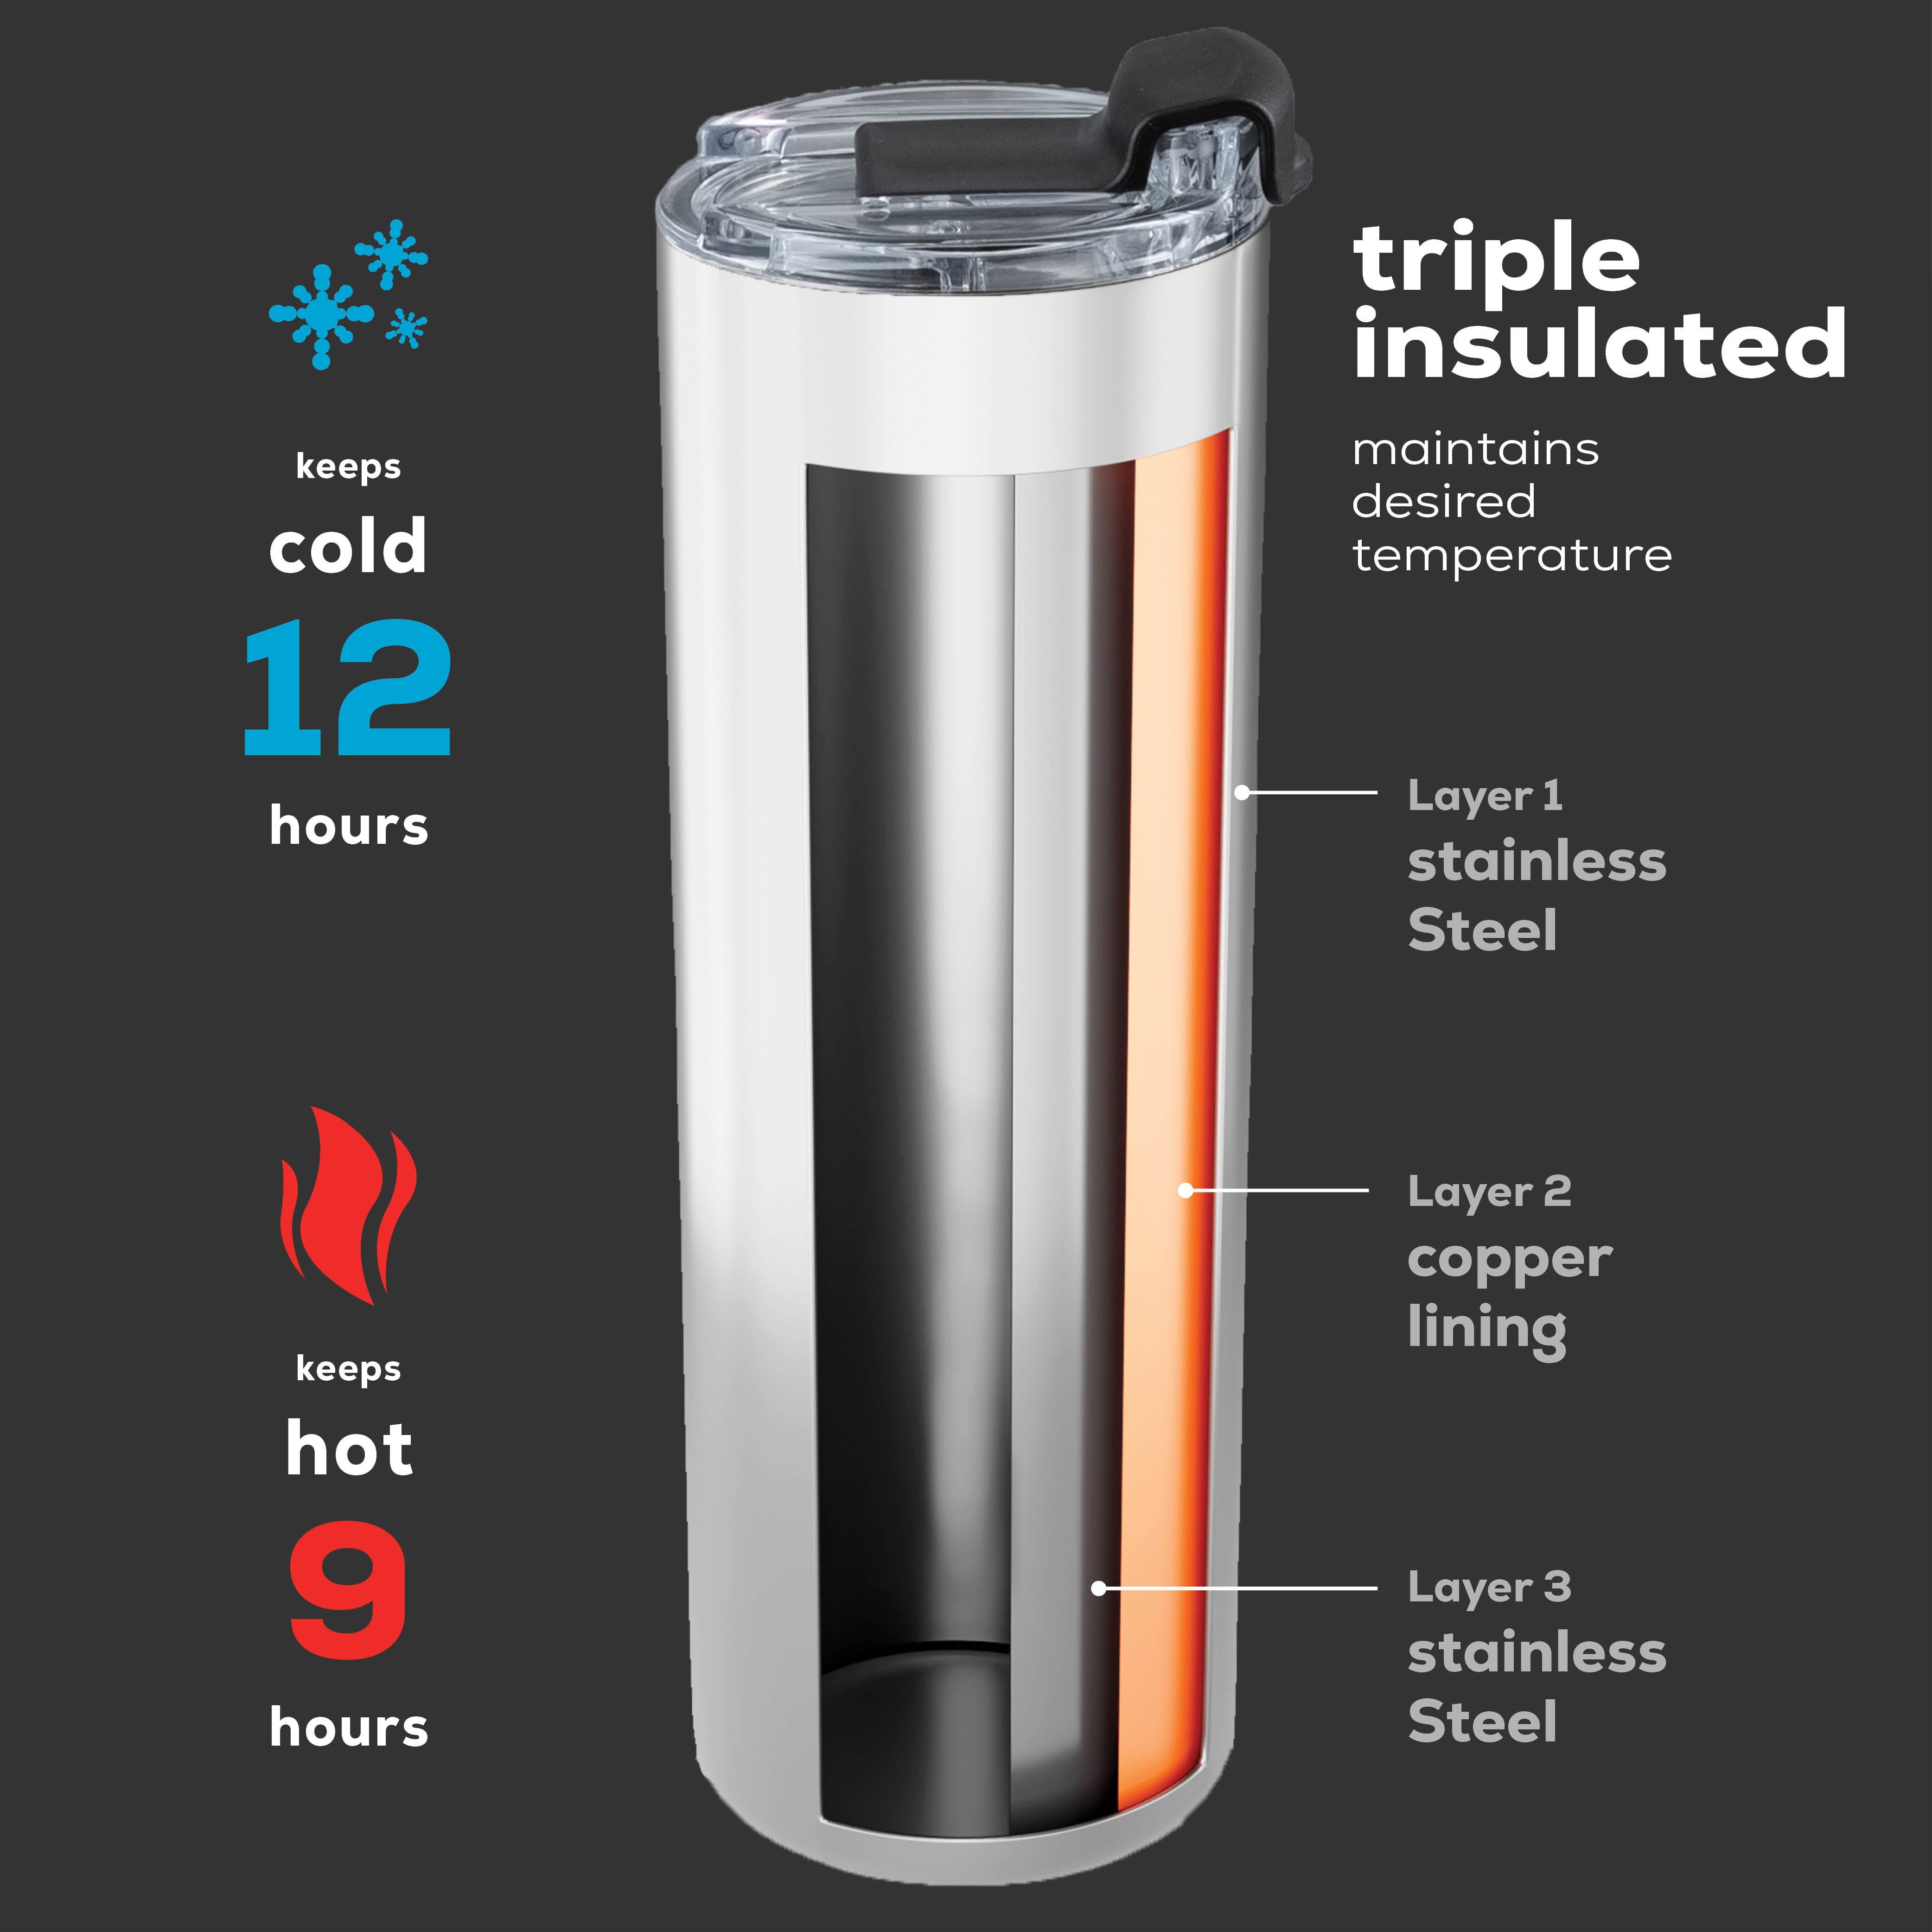 Skinny Drink Bottle Insulated Stainless Steel Slim Best Gift Leak-Proof